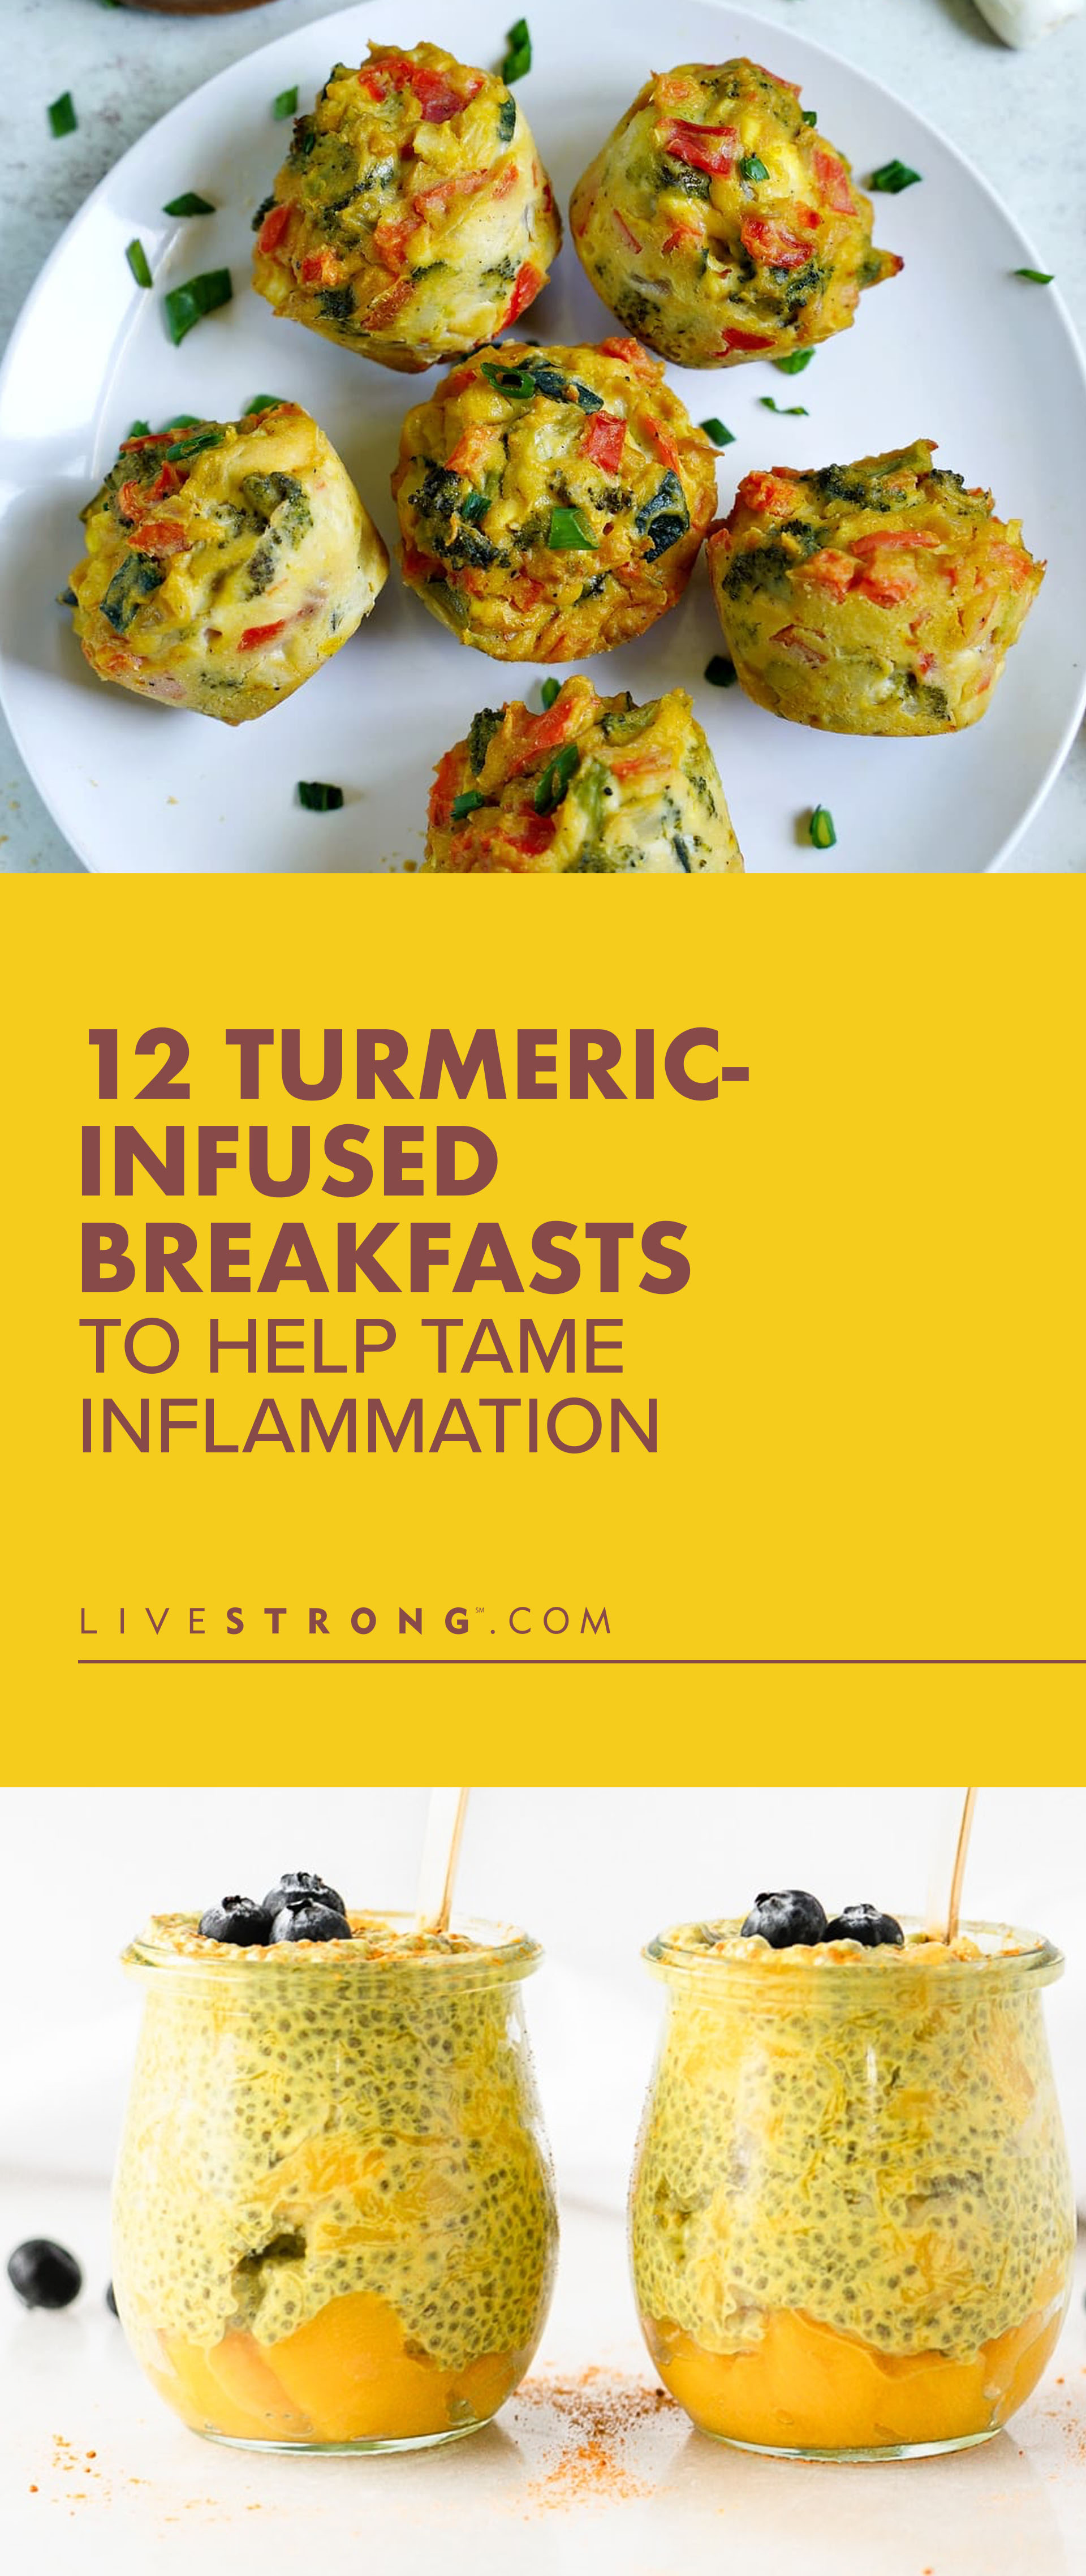 Turmeric-infused recipes